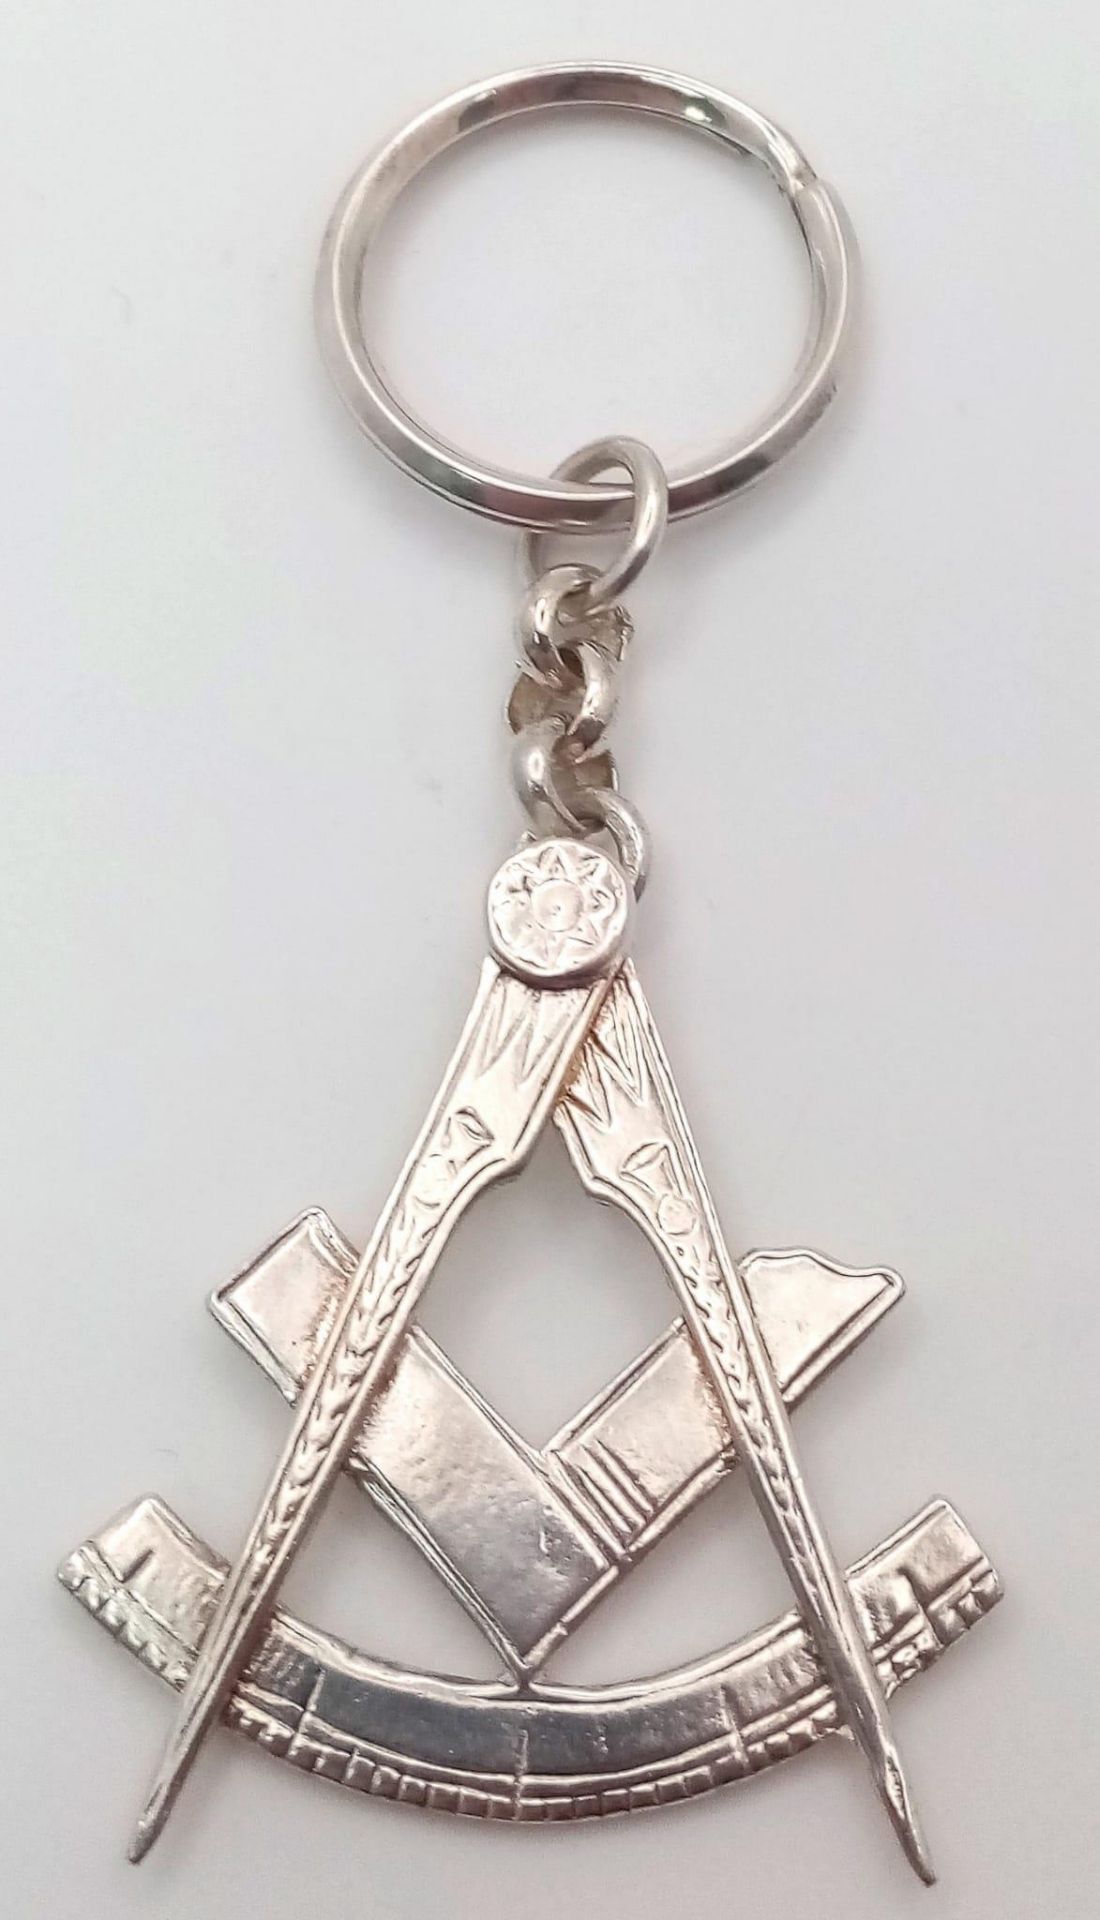 A Masonic Symbol Sterling Silver Key Chain. 6cm x 4cm. 15g